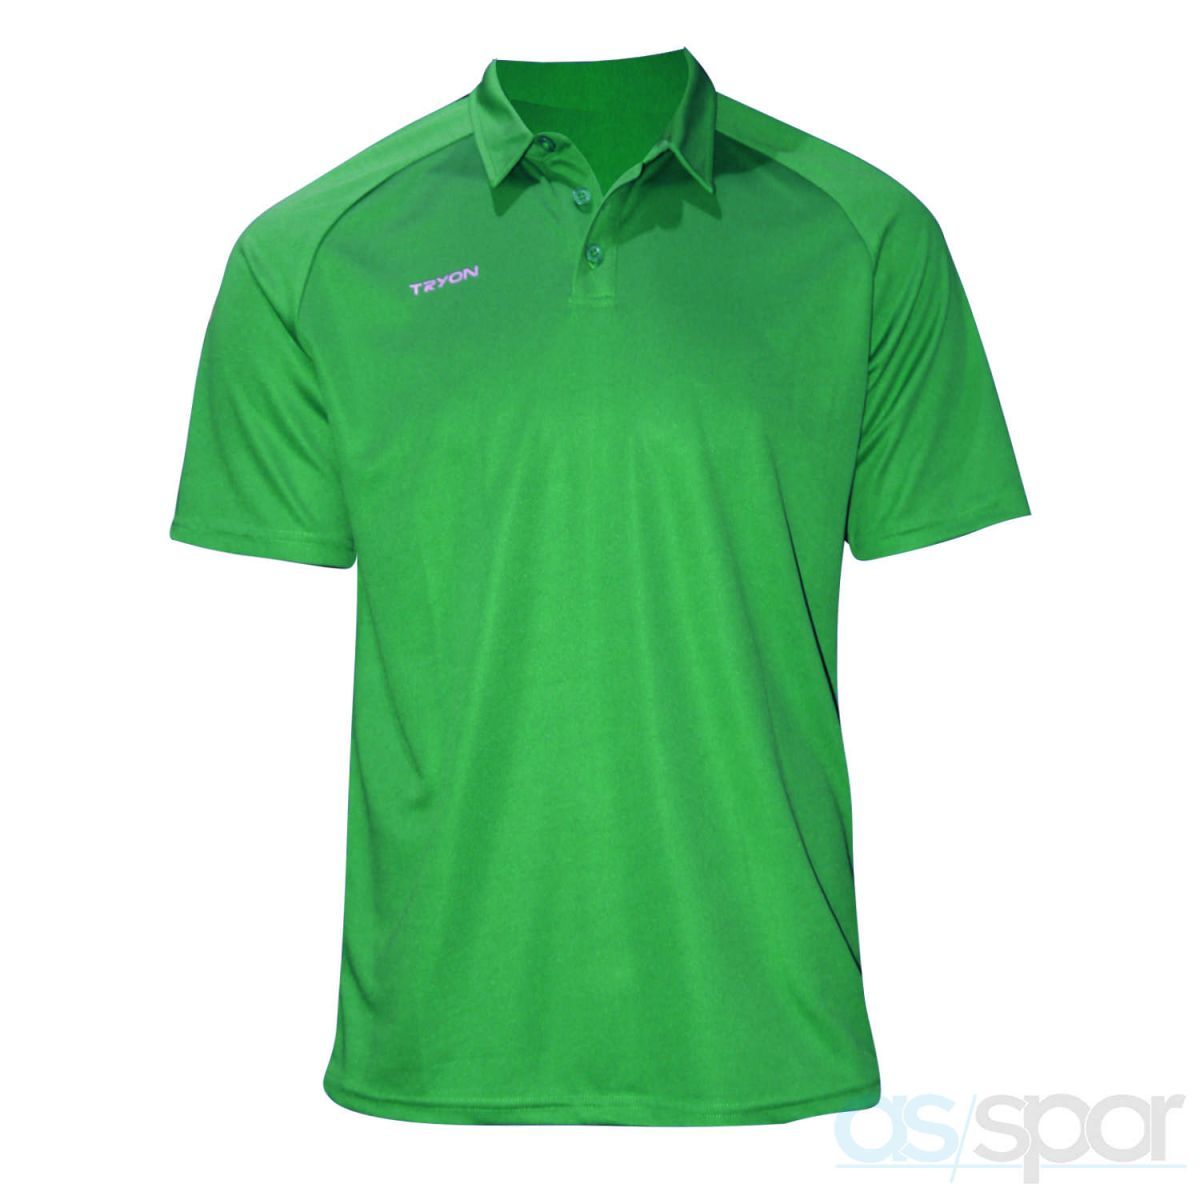 Tryon Yeşil Polo Tshirt victory 1018040